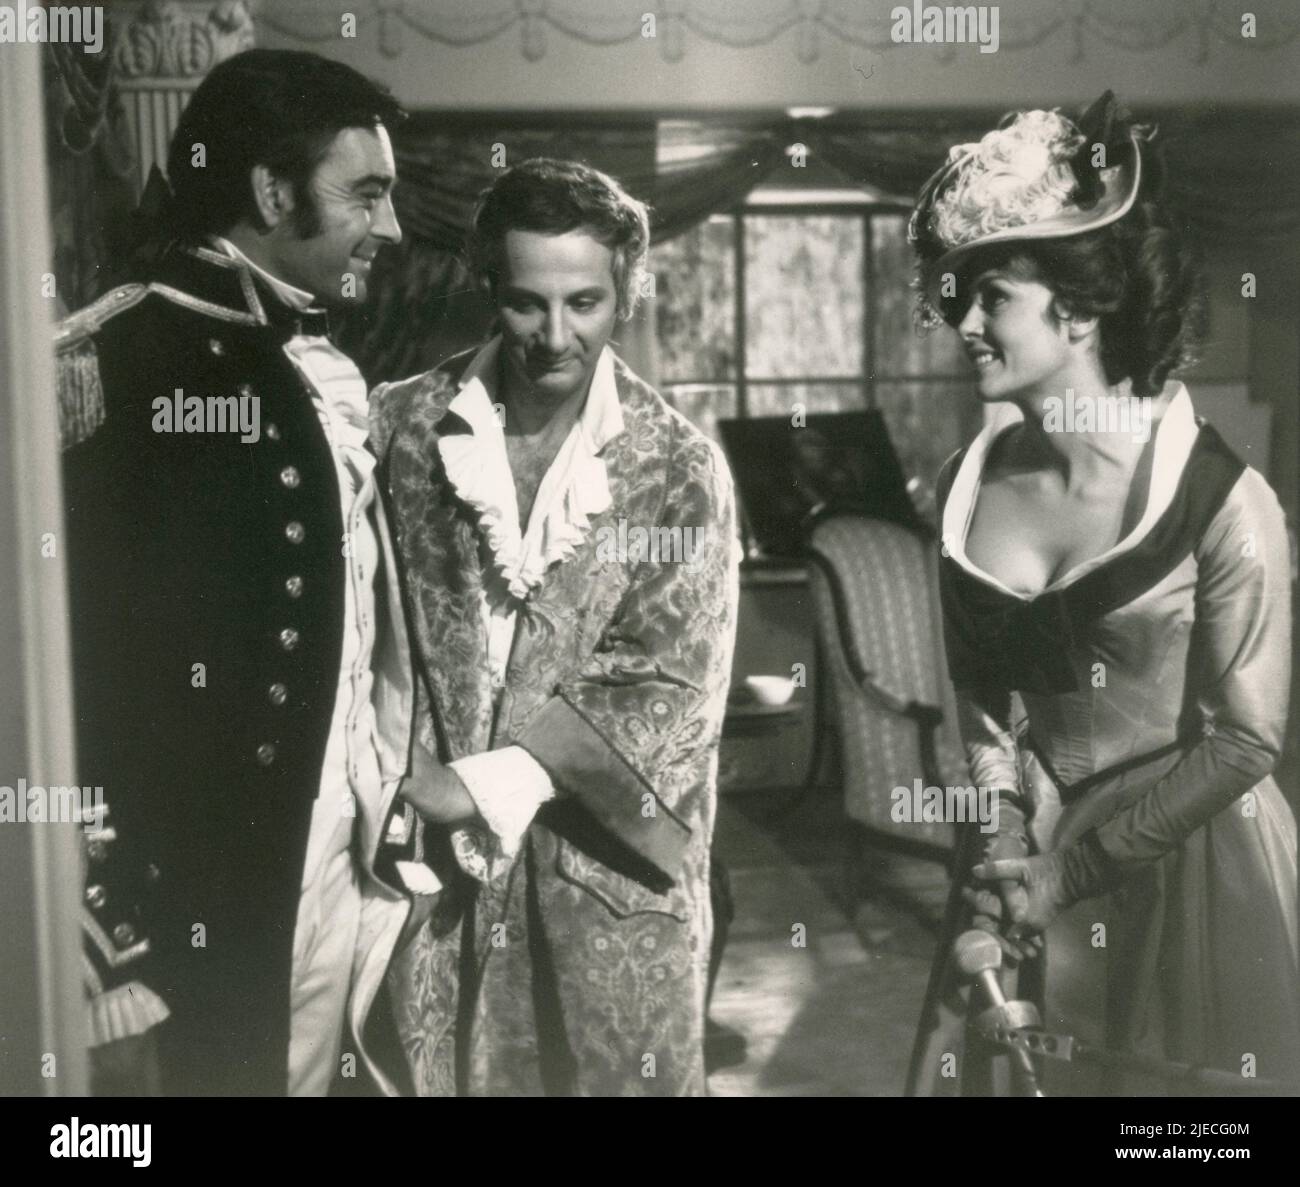 Actors Richard Johnson, Boy Gobert, and actress Michele Mercier in the movie Emma Hamilton, D/I/F 1968 Stock Photo